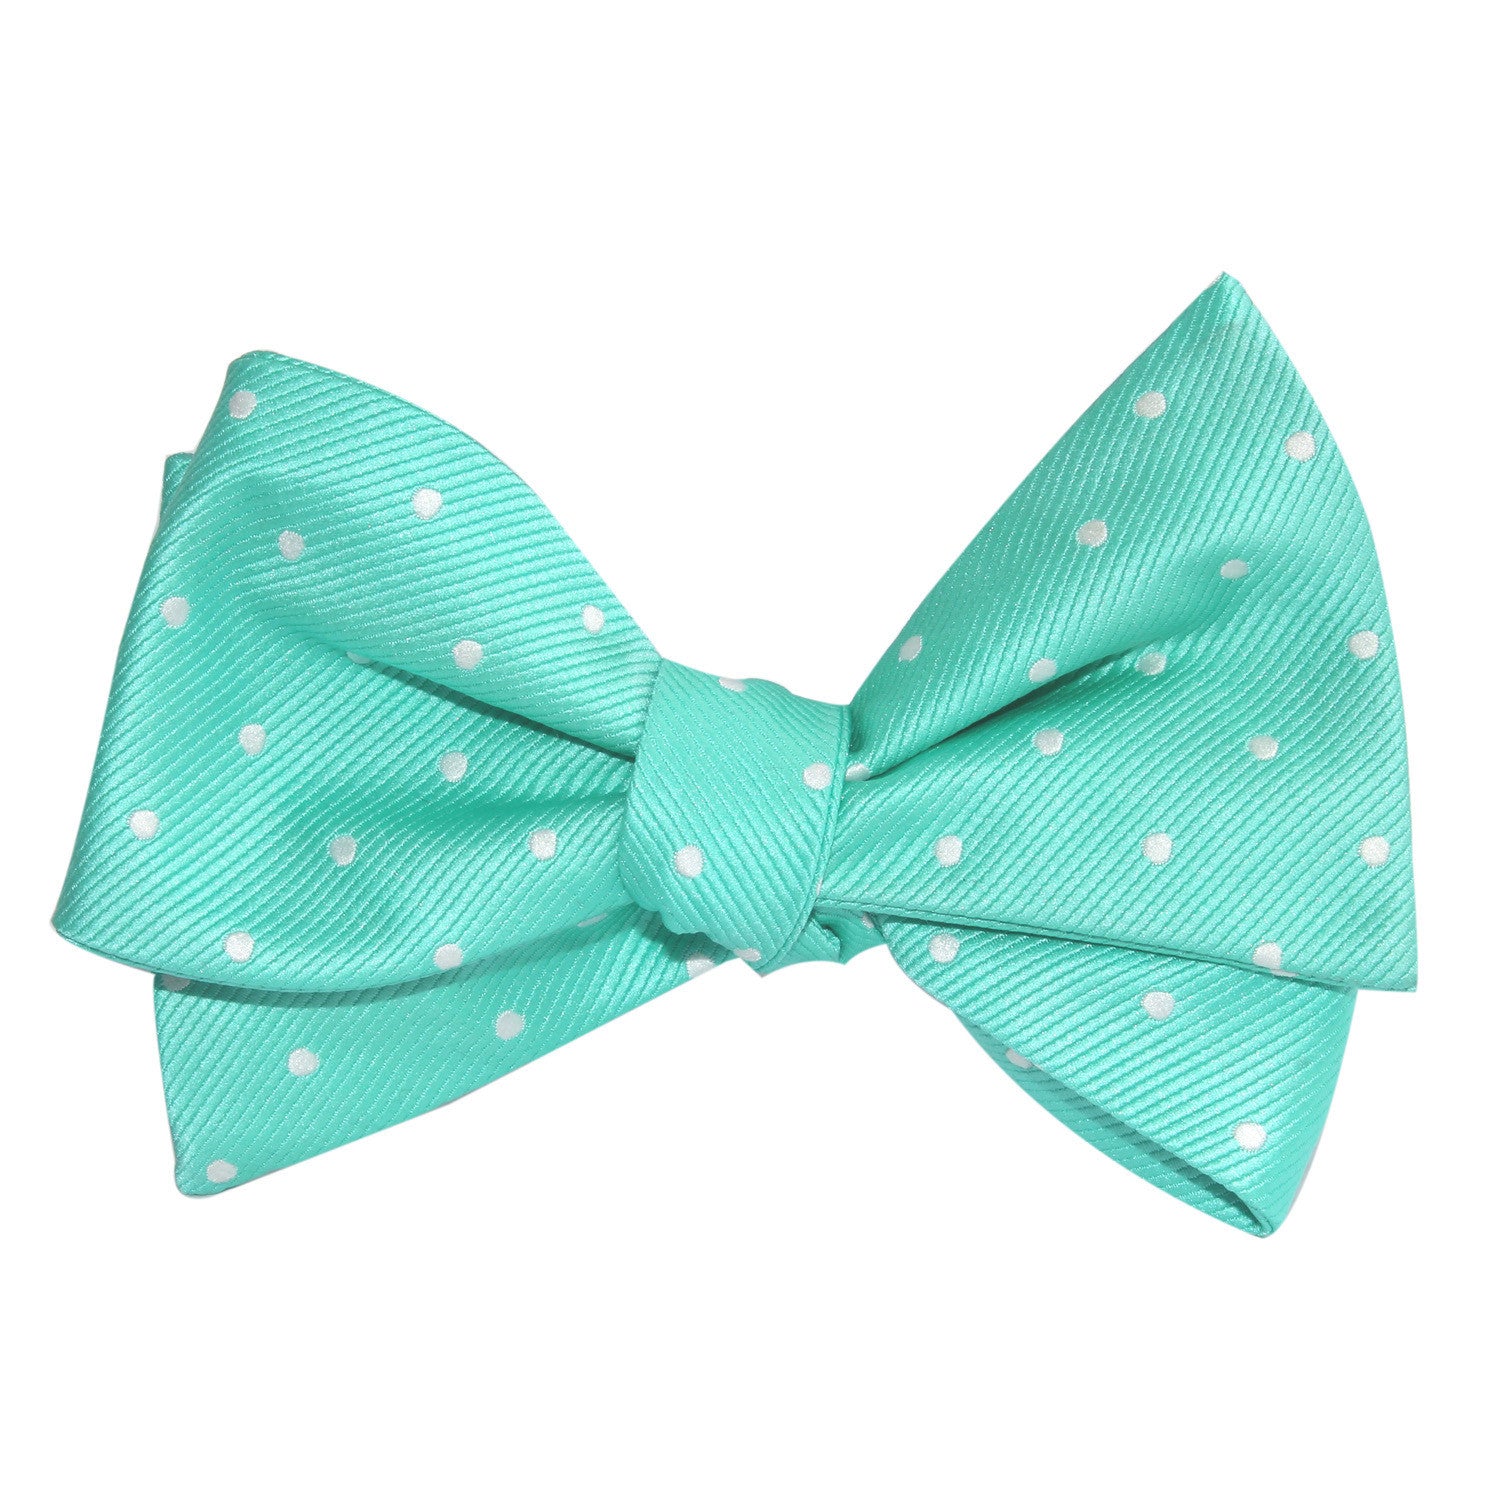 Seafoam Green with White Polka Dots Self Tie Bow Tie 2